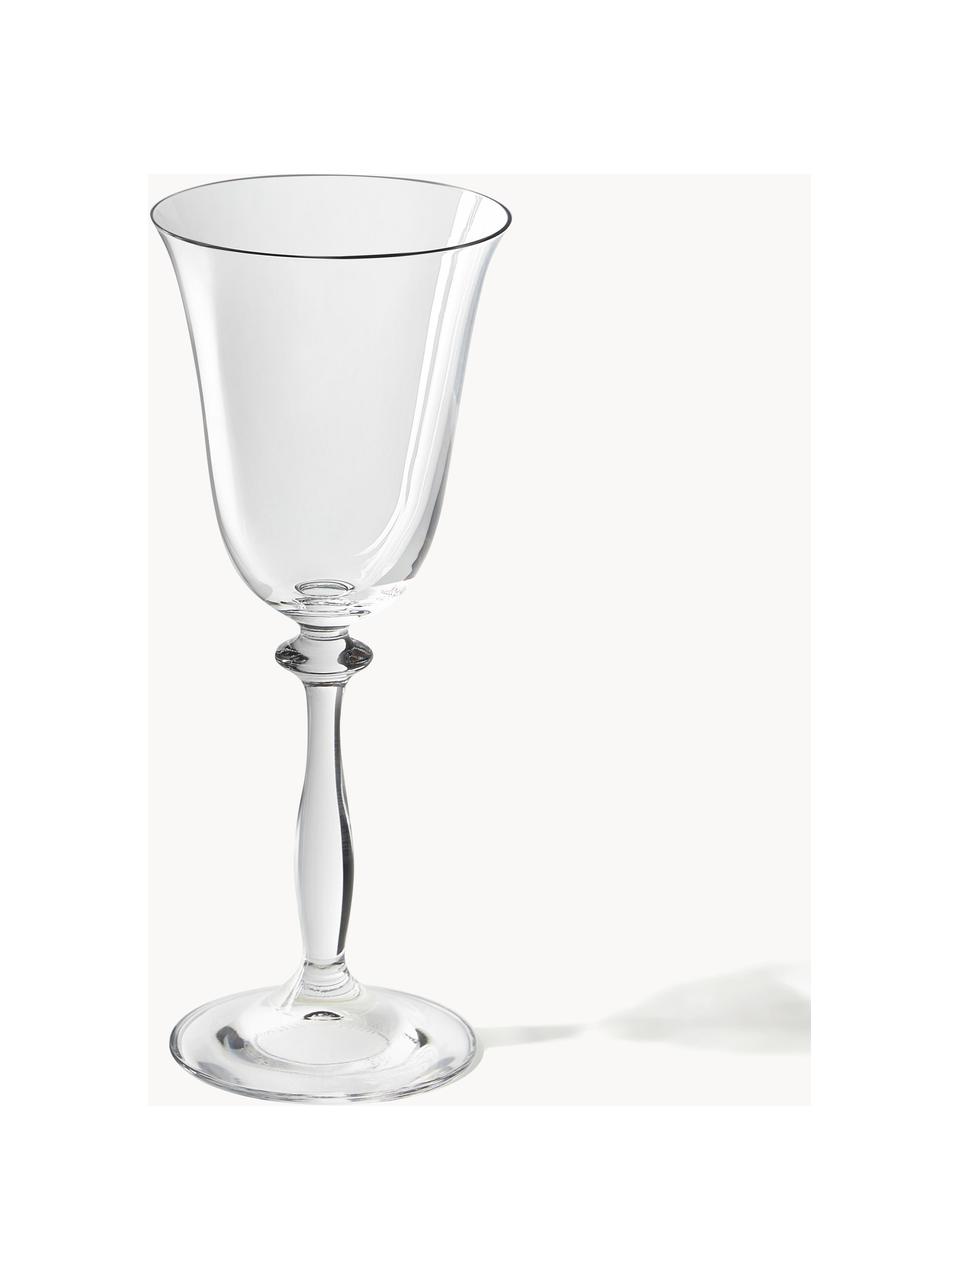 Witte wijnglazen Lacey, 4 stuks, Crystal glas/kristalglas, Transparant, Ø 7 x H 25 cm, 185 ml